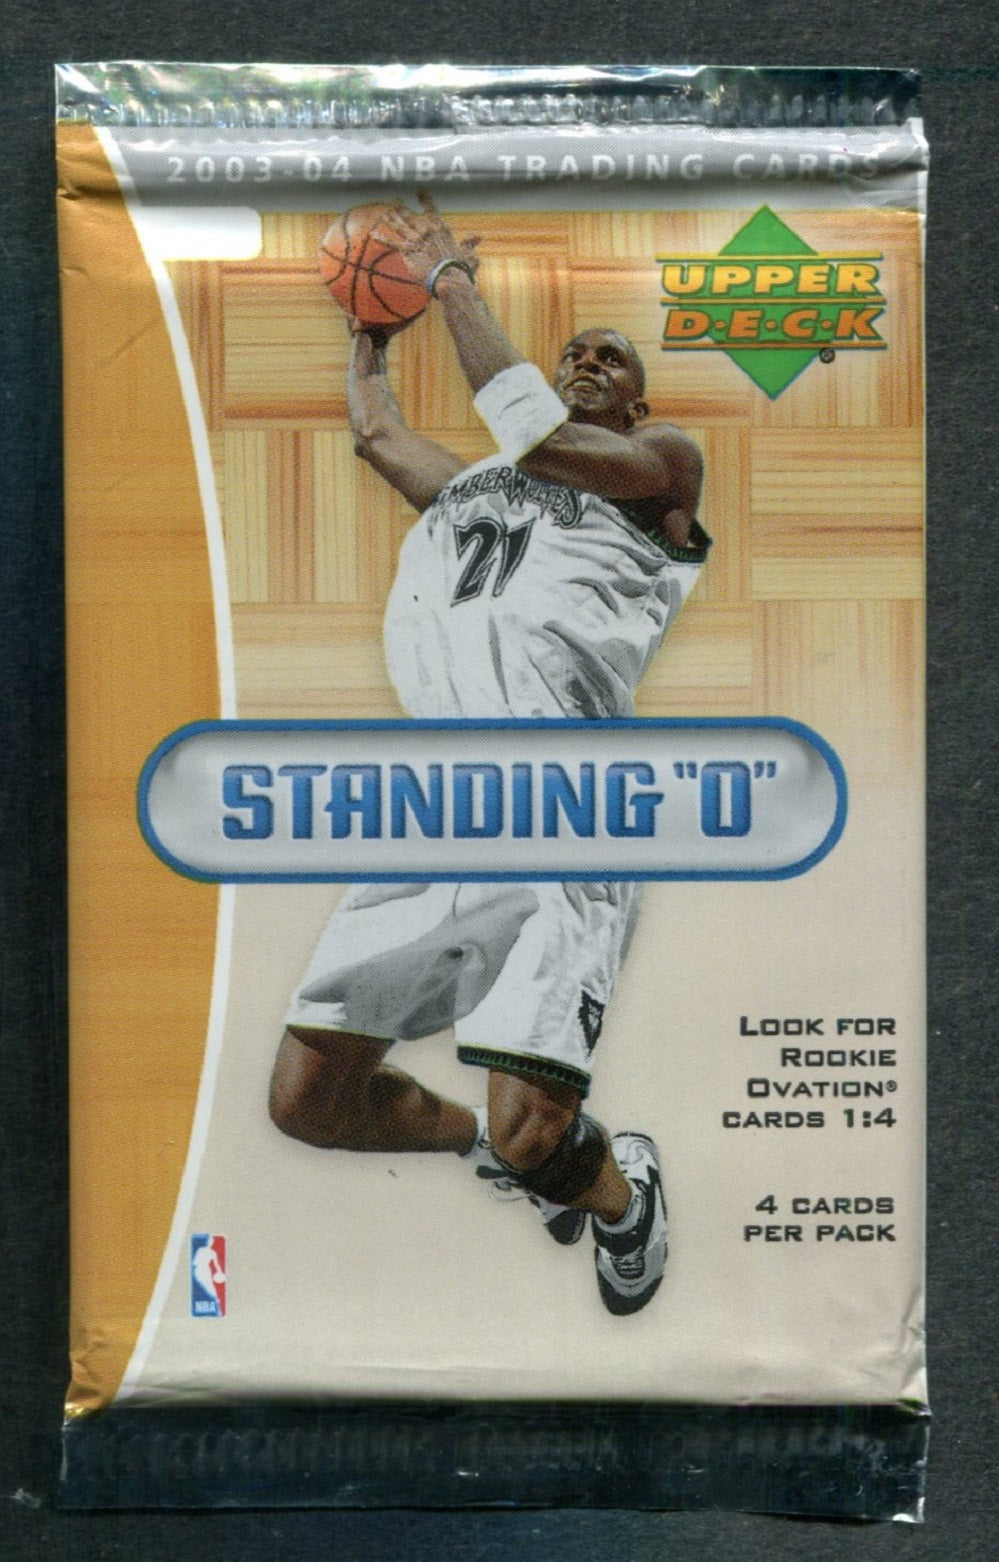 2003/04 Upper Deck Standing "O" Basketball Unopened Pack (4 Cards)